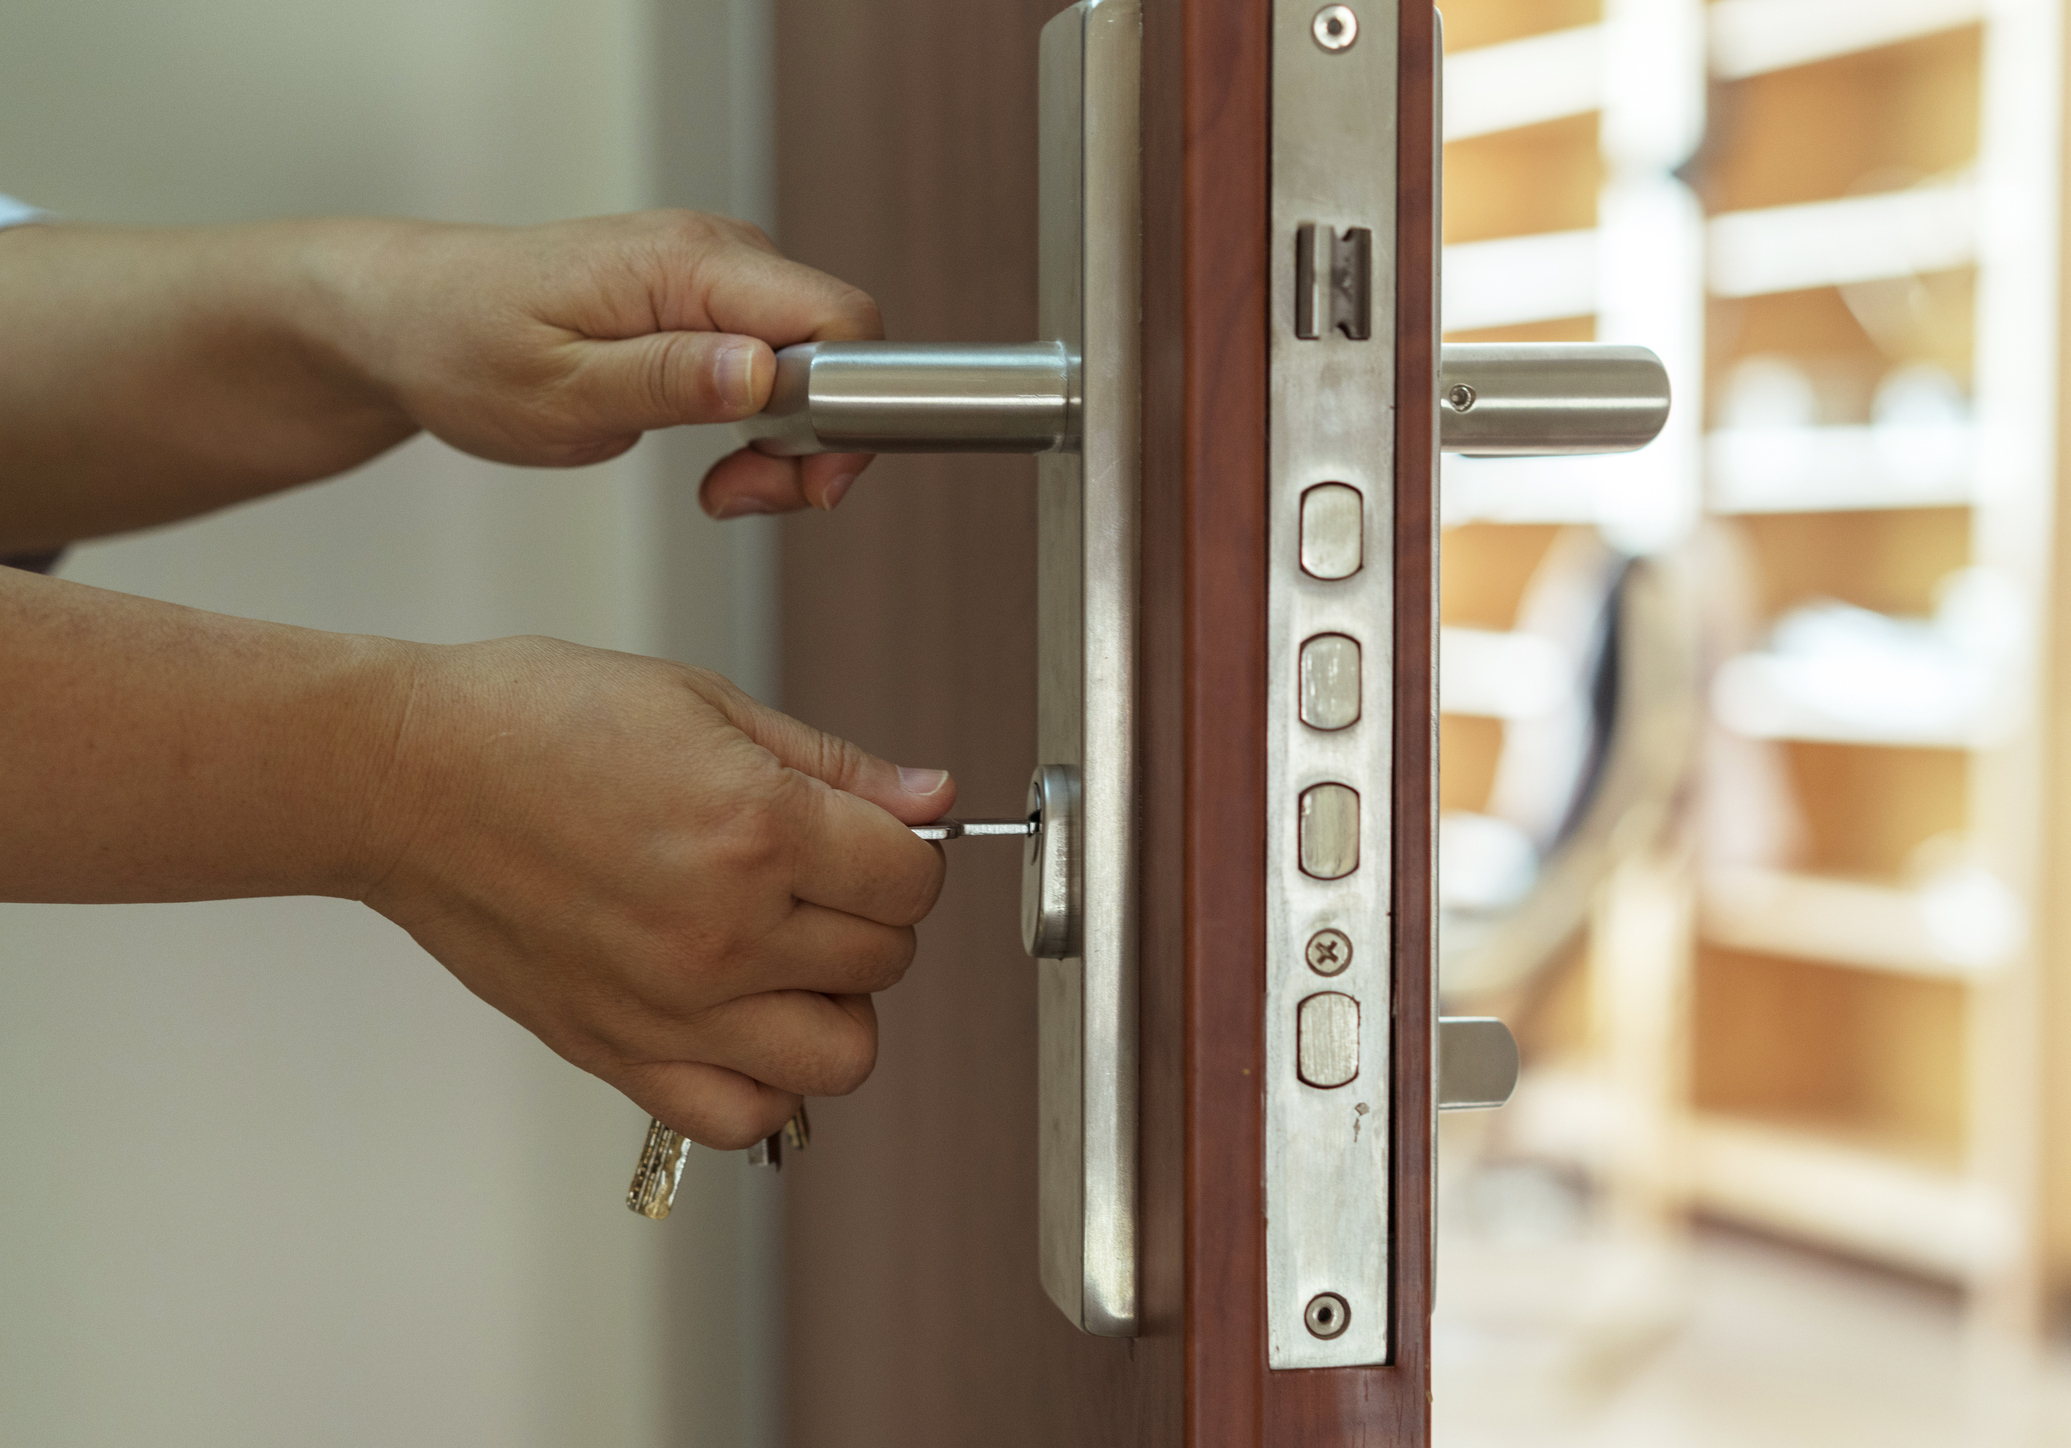 Person inserting a key into a door lock, preparing to unlock it